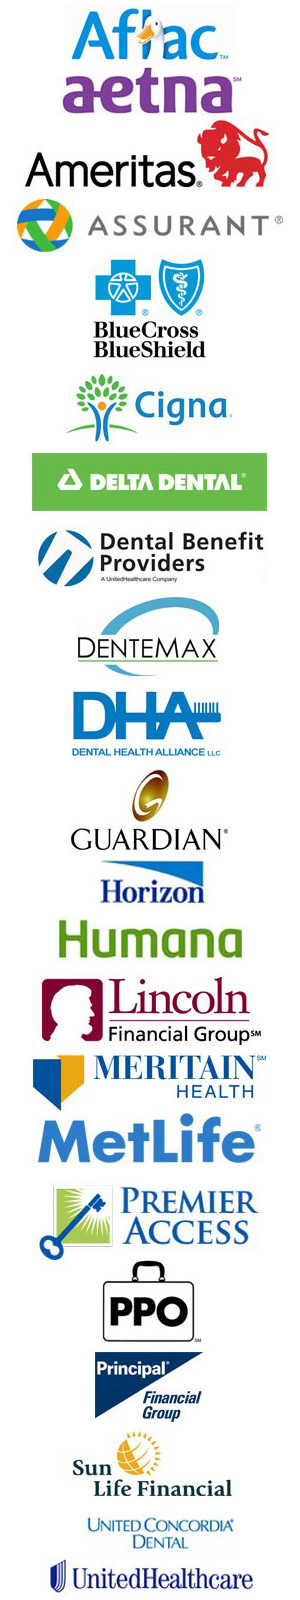 Insurance Verification logos banner